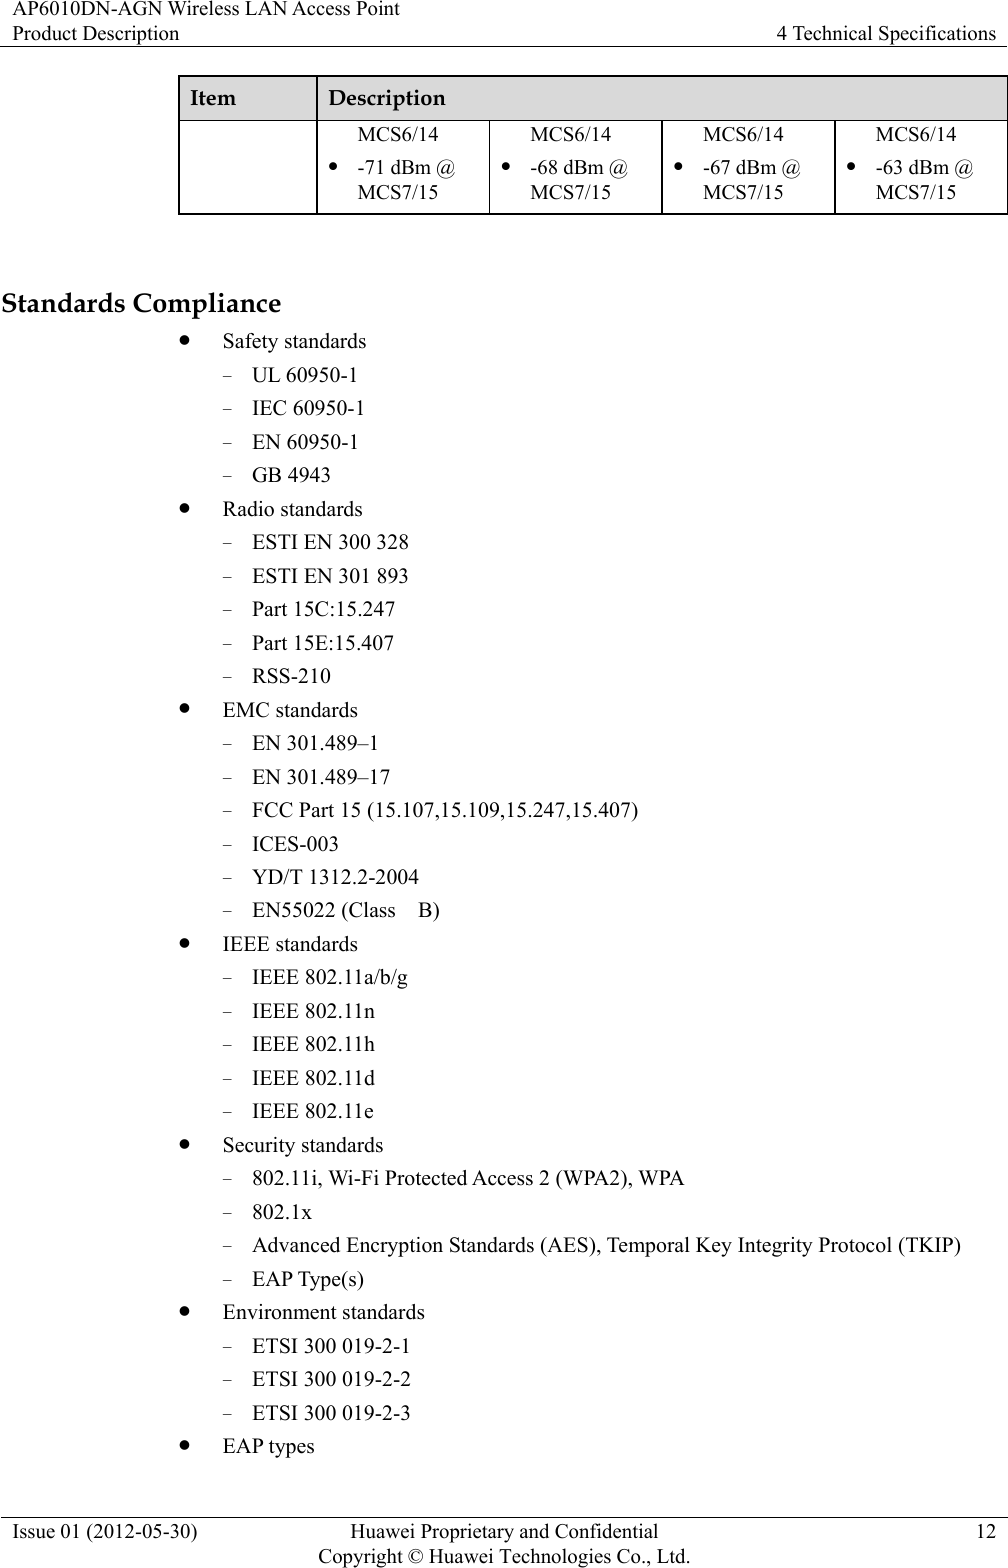 AP6010DN-AGN Wireless LAN Access Point Product Description  4 Technical Specifications Issue 01 (2012-05-30)  Huawei Proprietary and Confidential         Copyright © Huawei Technologies Co., Ltd.12 Item  Description MCS6/14 z -71 dBm @ MCS7/15 MCS6/14 z -68 dBm @ MCS7/15 MCS6/14 z -67 dBm @ MCS7/15 MCS6/14 z -63 dBm @ MCS7/15  Standards Compliance z Safety standards − UL 60950-1 − IEC 60950-1 − EN 60950-1 − GB 4943 z Radio standards − ESTI EN 300 328 − ESTI EN 301 893   − Part 15C:15.247 − Part 15E:15.407 − RSS-210 z EMC standards − EN 301.489–1 − EN 301.489–17 − FCC Part 15 (15.107,15.109,15.247,15.407) − ICES-003 − YD/T 1312.2-2004 − EN55022 (Class  B) z IEEE standards − IEEE 802.11a/b/g − IEEE 802.11n − IEEE 802.11h − IEEE 802.11d − IEEE 802.11e z Security standards − 802.11i, Wi-Fi Protected Access 2 (WPA2), WPA − 802.1x − Advanced Encryption Standards (AES), Temporal Key Integrity Protocol (TKIP) − EAP Type(s) z Environment standards − ETSI 300 019-2-1 − ETSI 300 019-2-2 − ETSI 300 019-2-3 z EAP types 